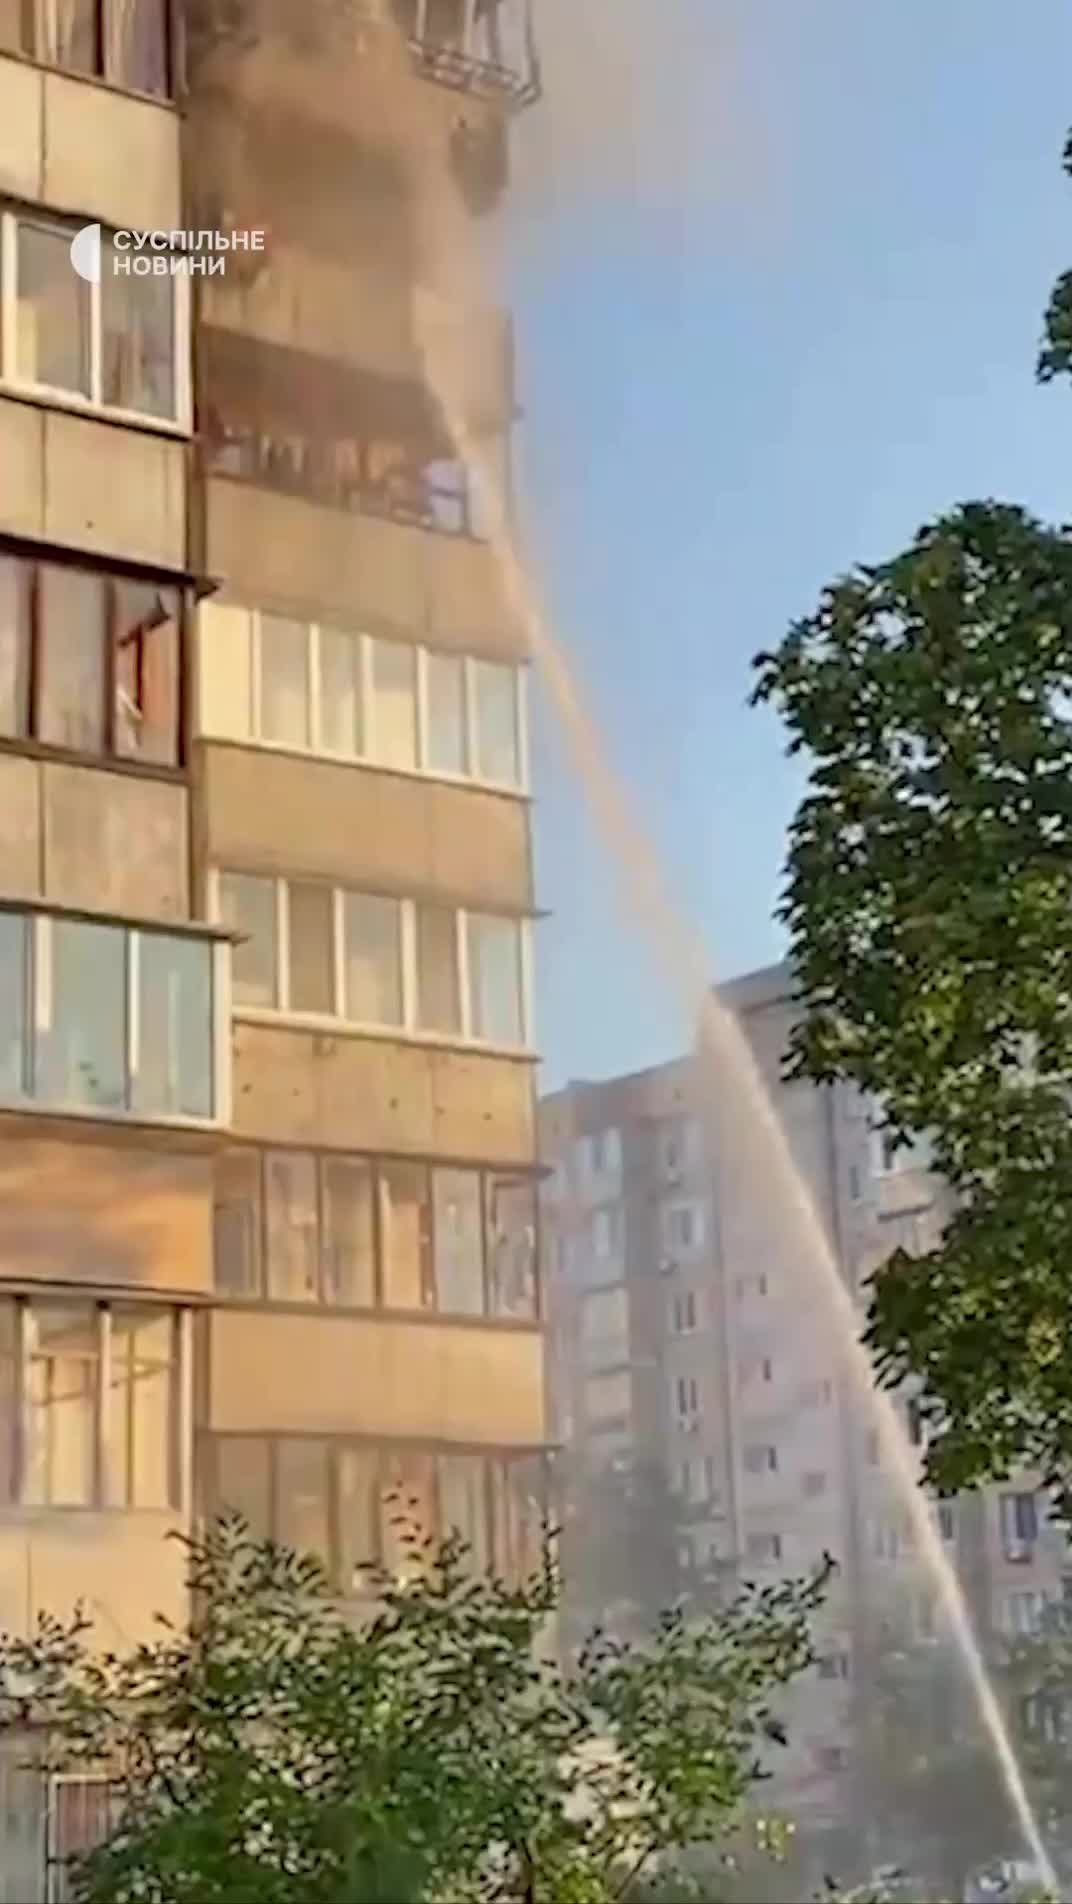 Житловий будинок постраждав внаслідок російського ракетного удару по Оболонському району Києва